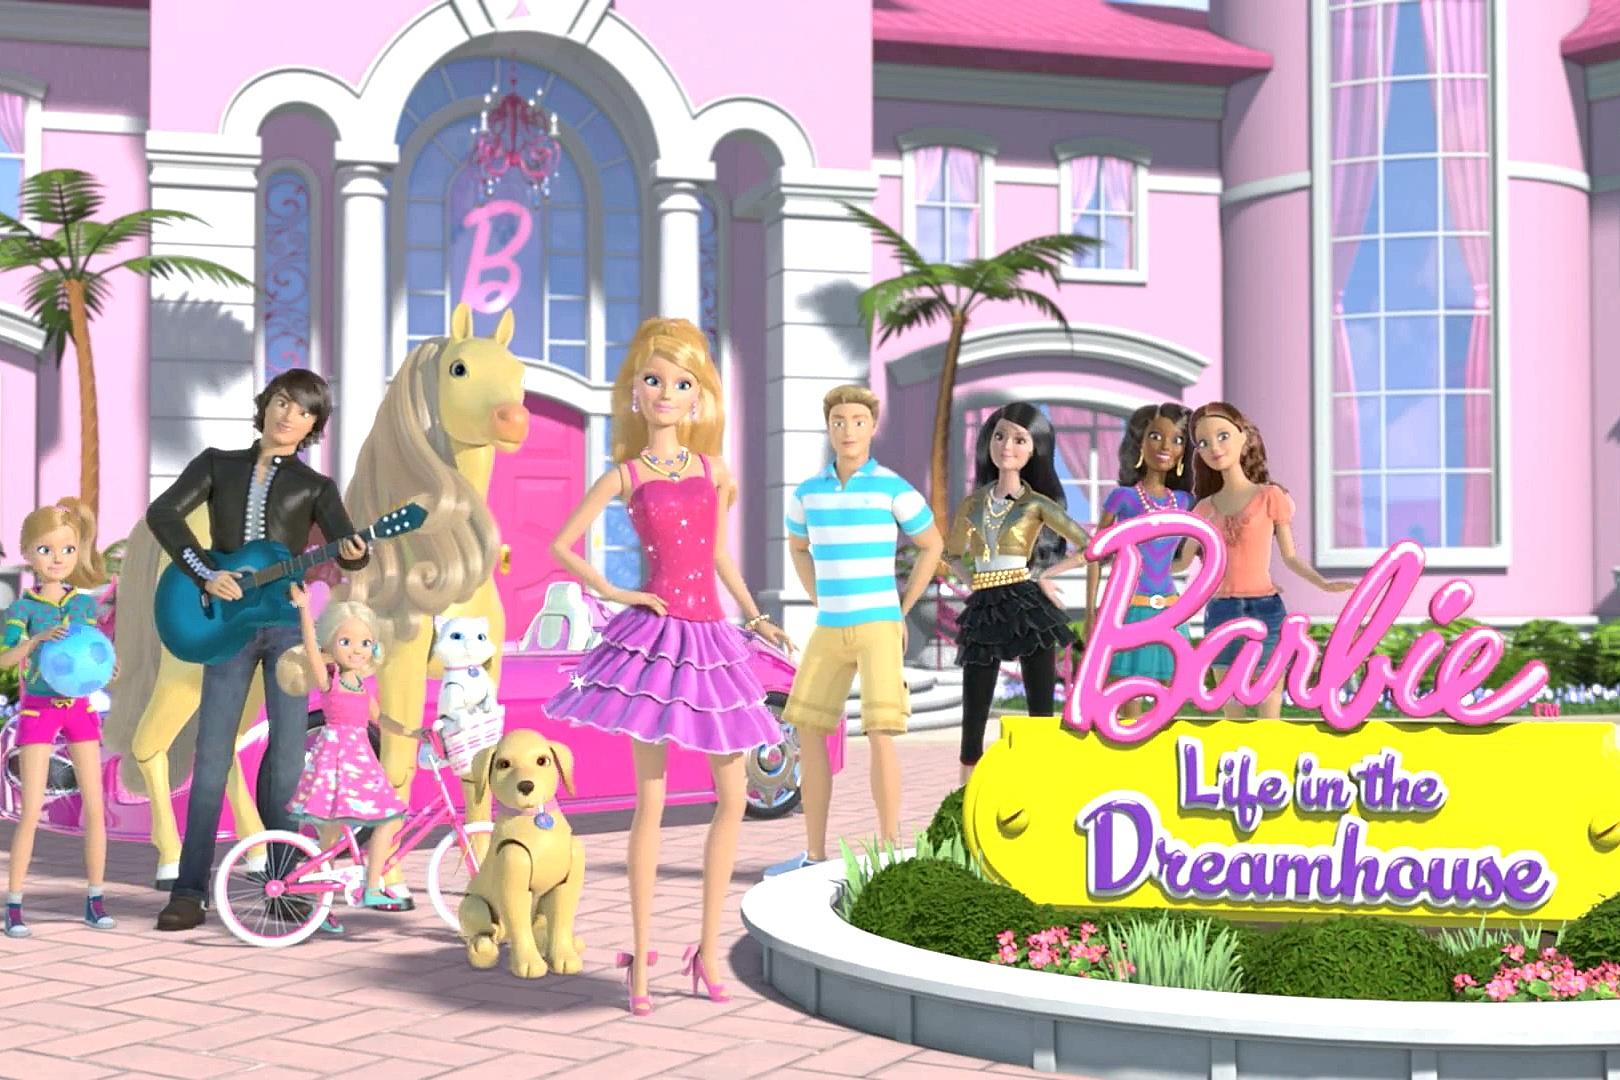 I'm a Barbie grandma and love my pink dream home — don't call me crazy